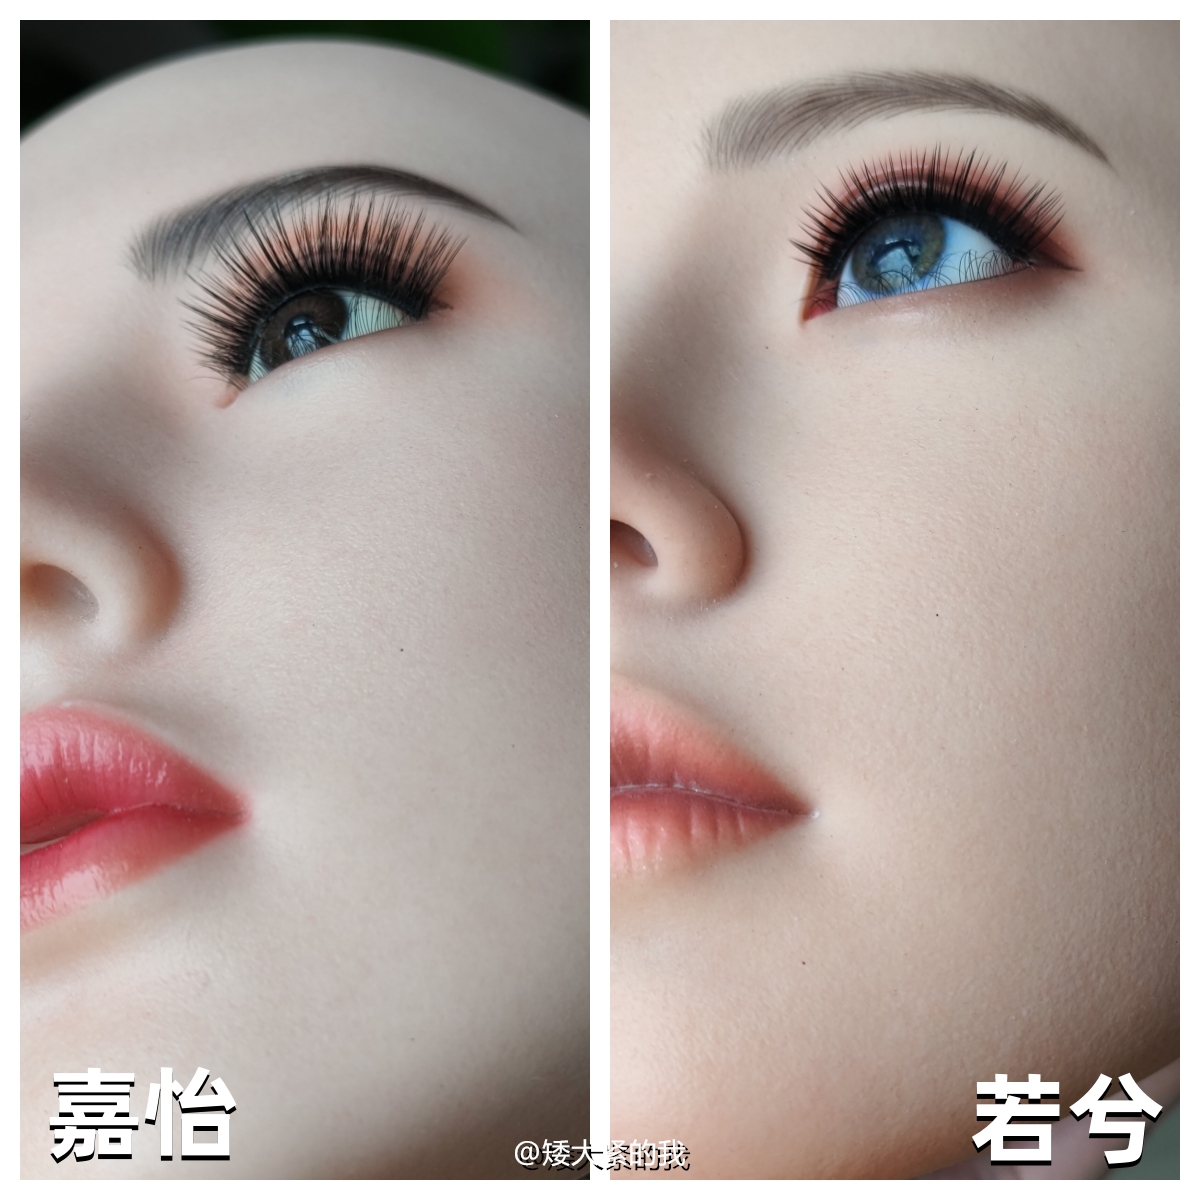 Gynoid Doll RZR|Realistic Silicone Sex Doll|Light Shooting|Head Sculpture|Head Carving|3D Eyeball|Lisa|Lori|13R|Doll Skin